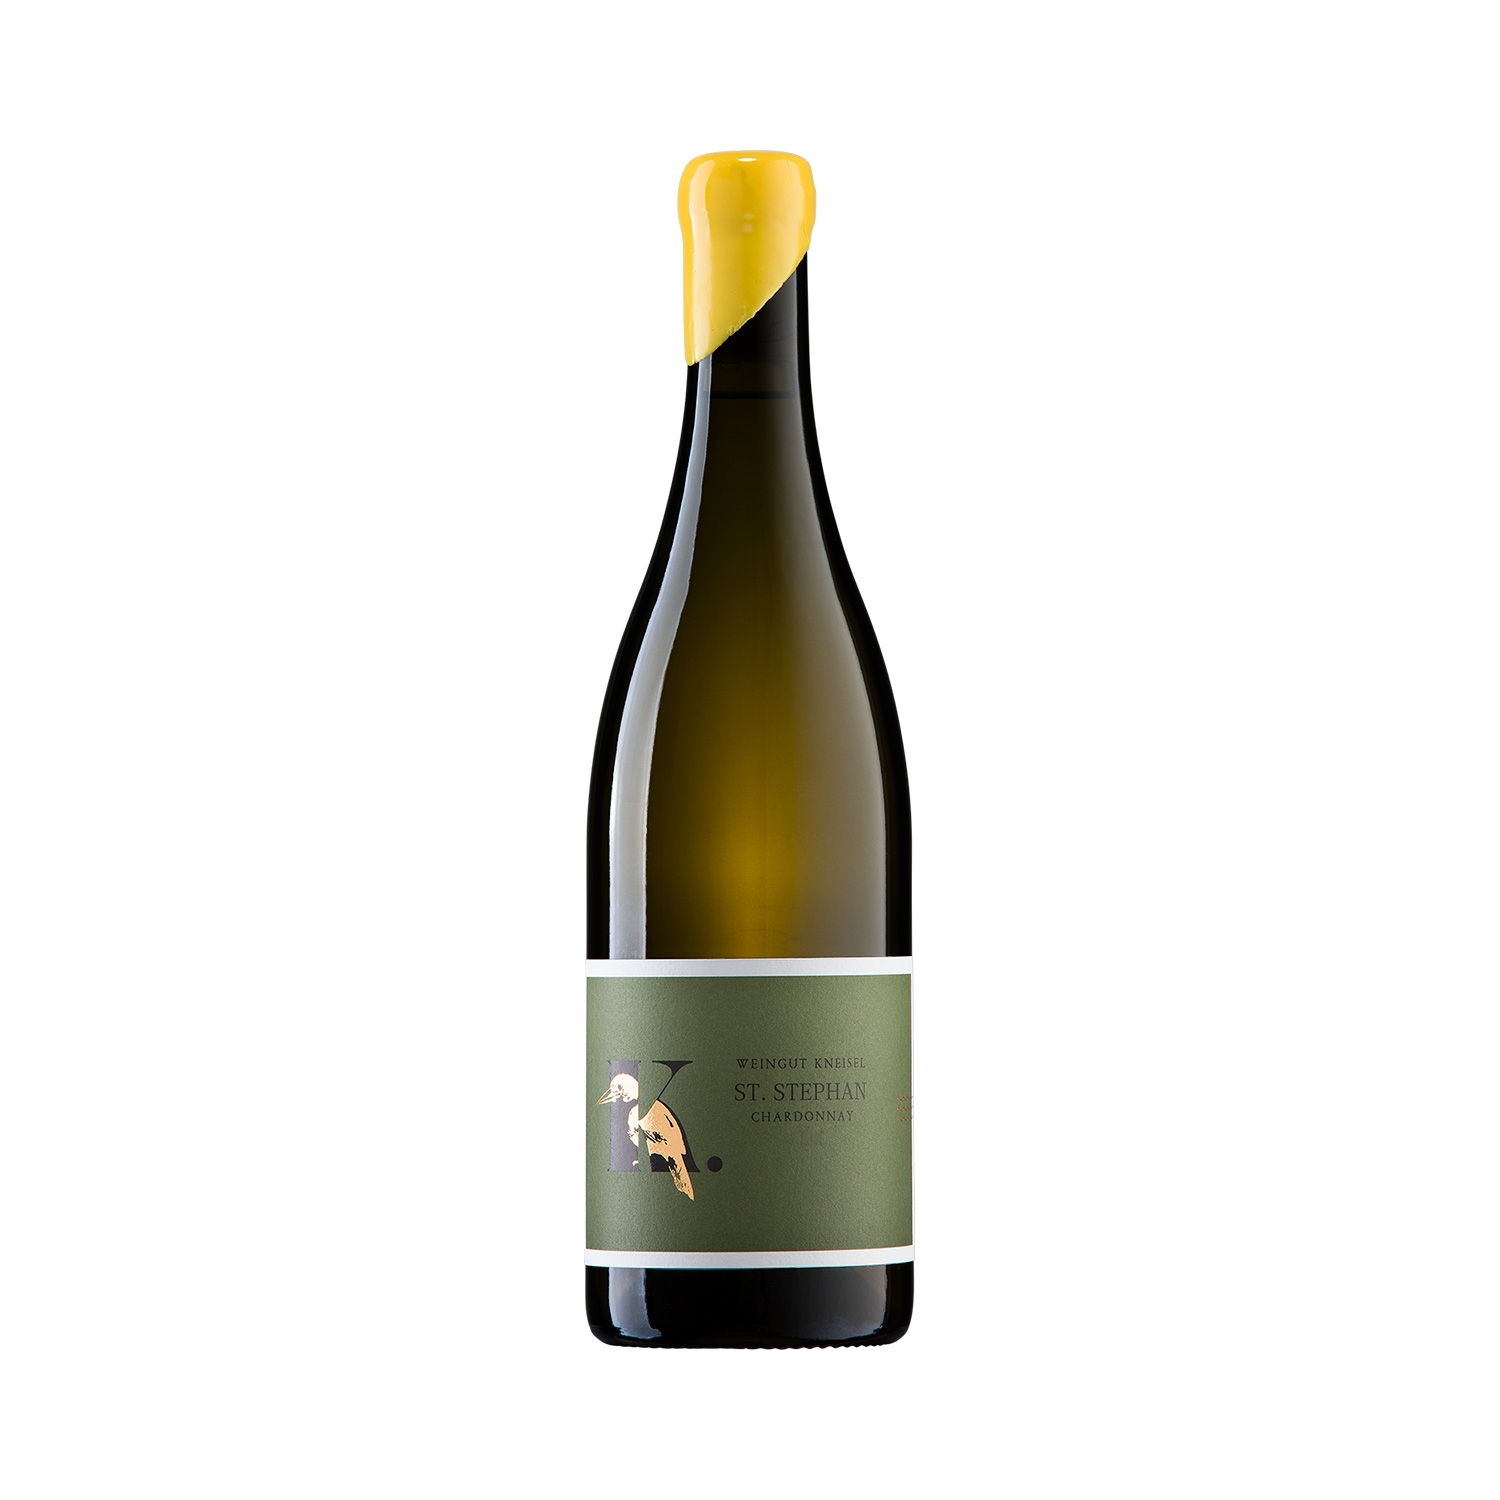 2019 Chardonnay trocken St. Stephan 0,75 L - Weingut Kneisel